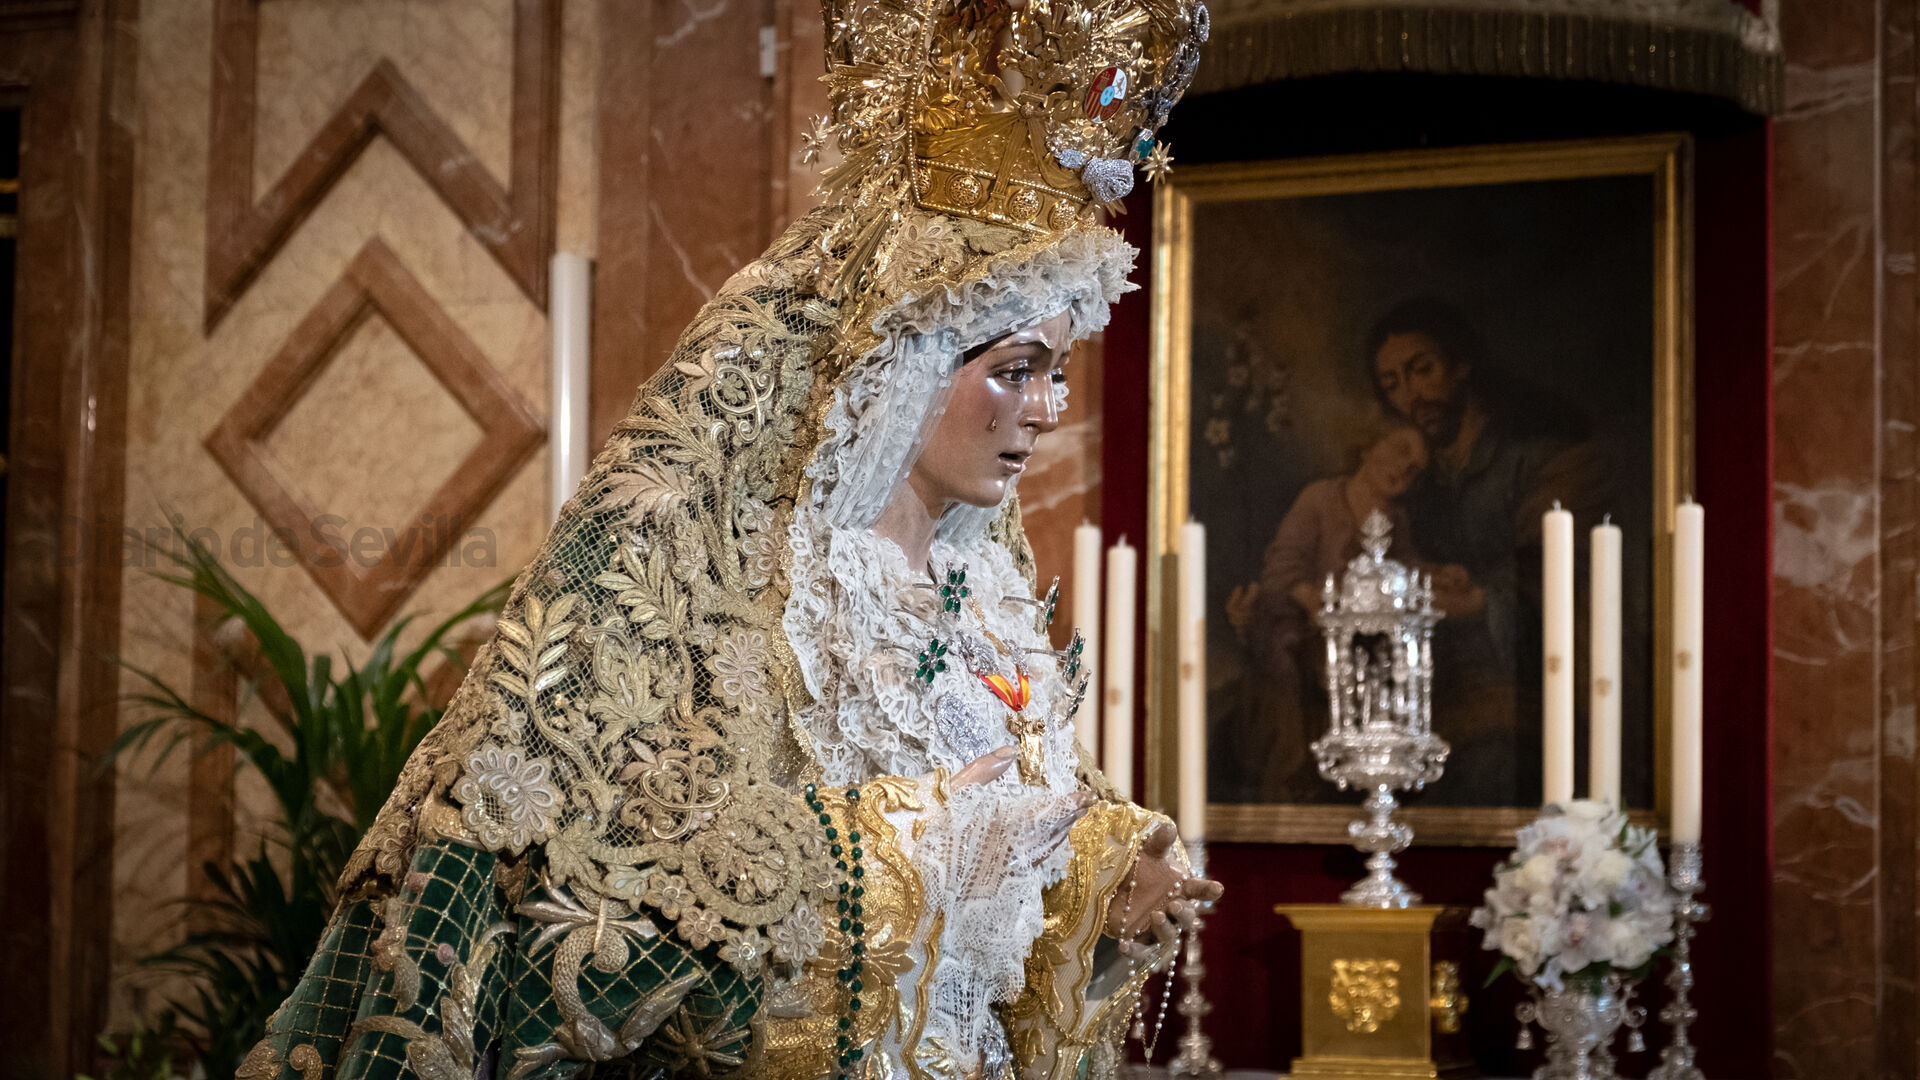 La veneraci&oacute;n a la Virgen de la Esperanza Macarena, en im&aacute;genes